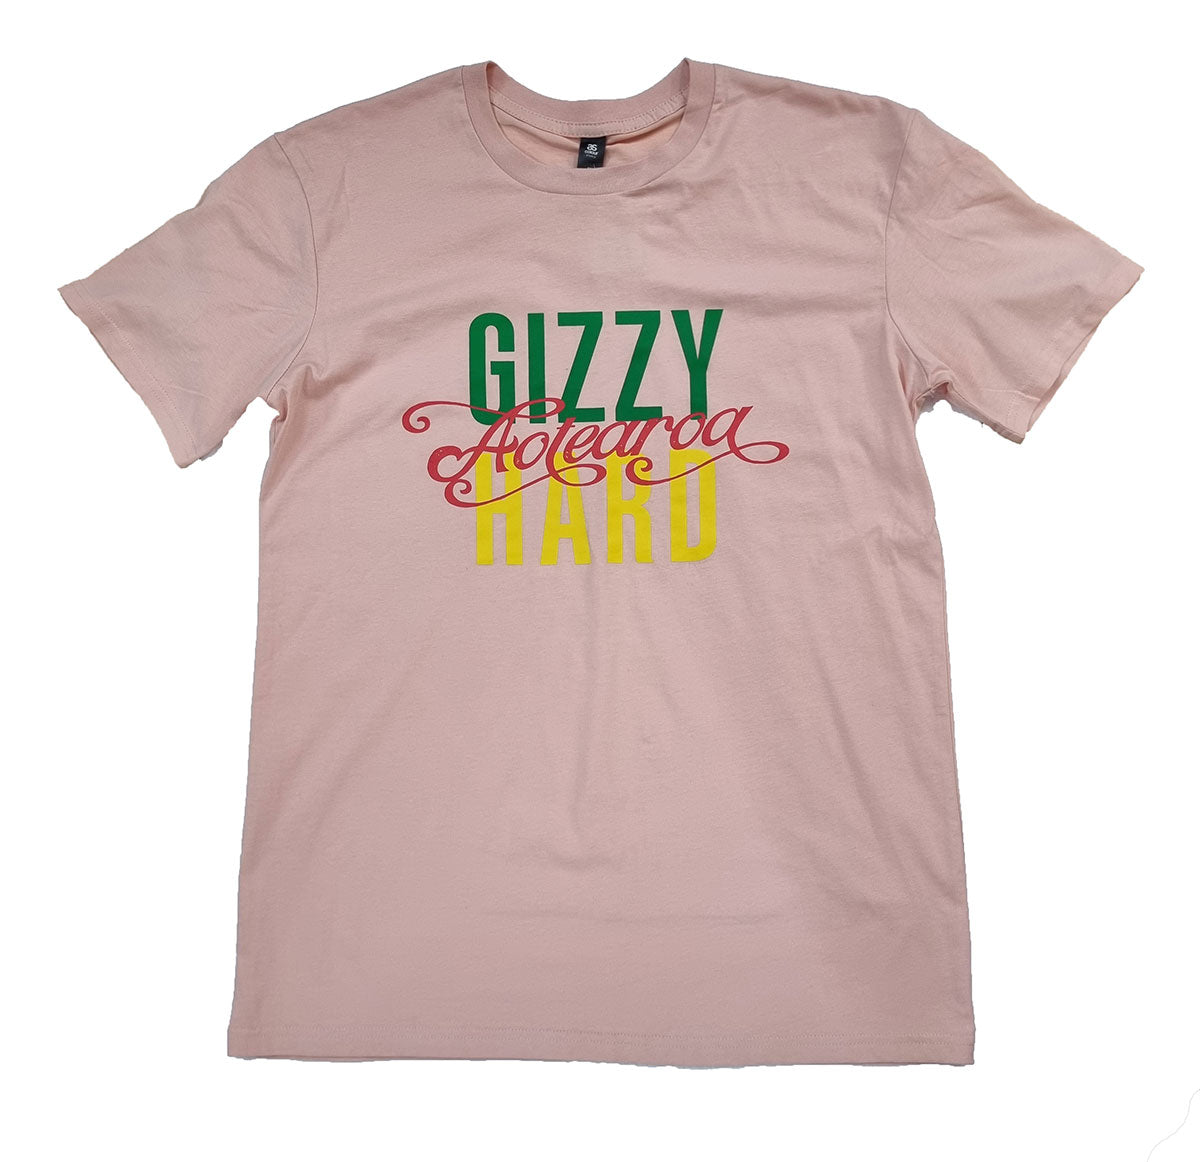 Gizzy Hard Aotearoa Mens Tee in pale pink with rasta print